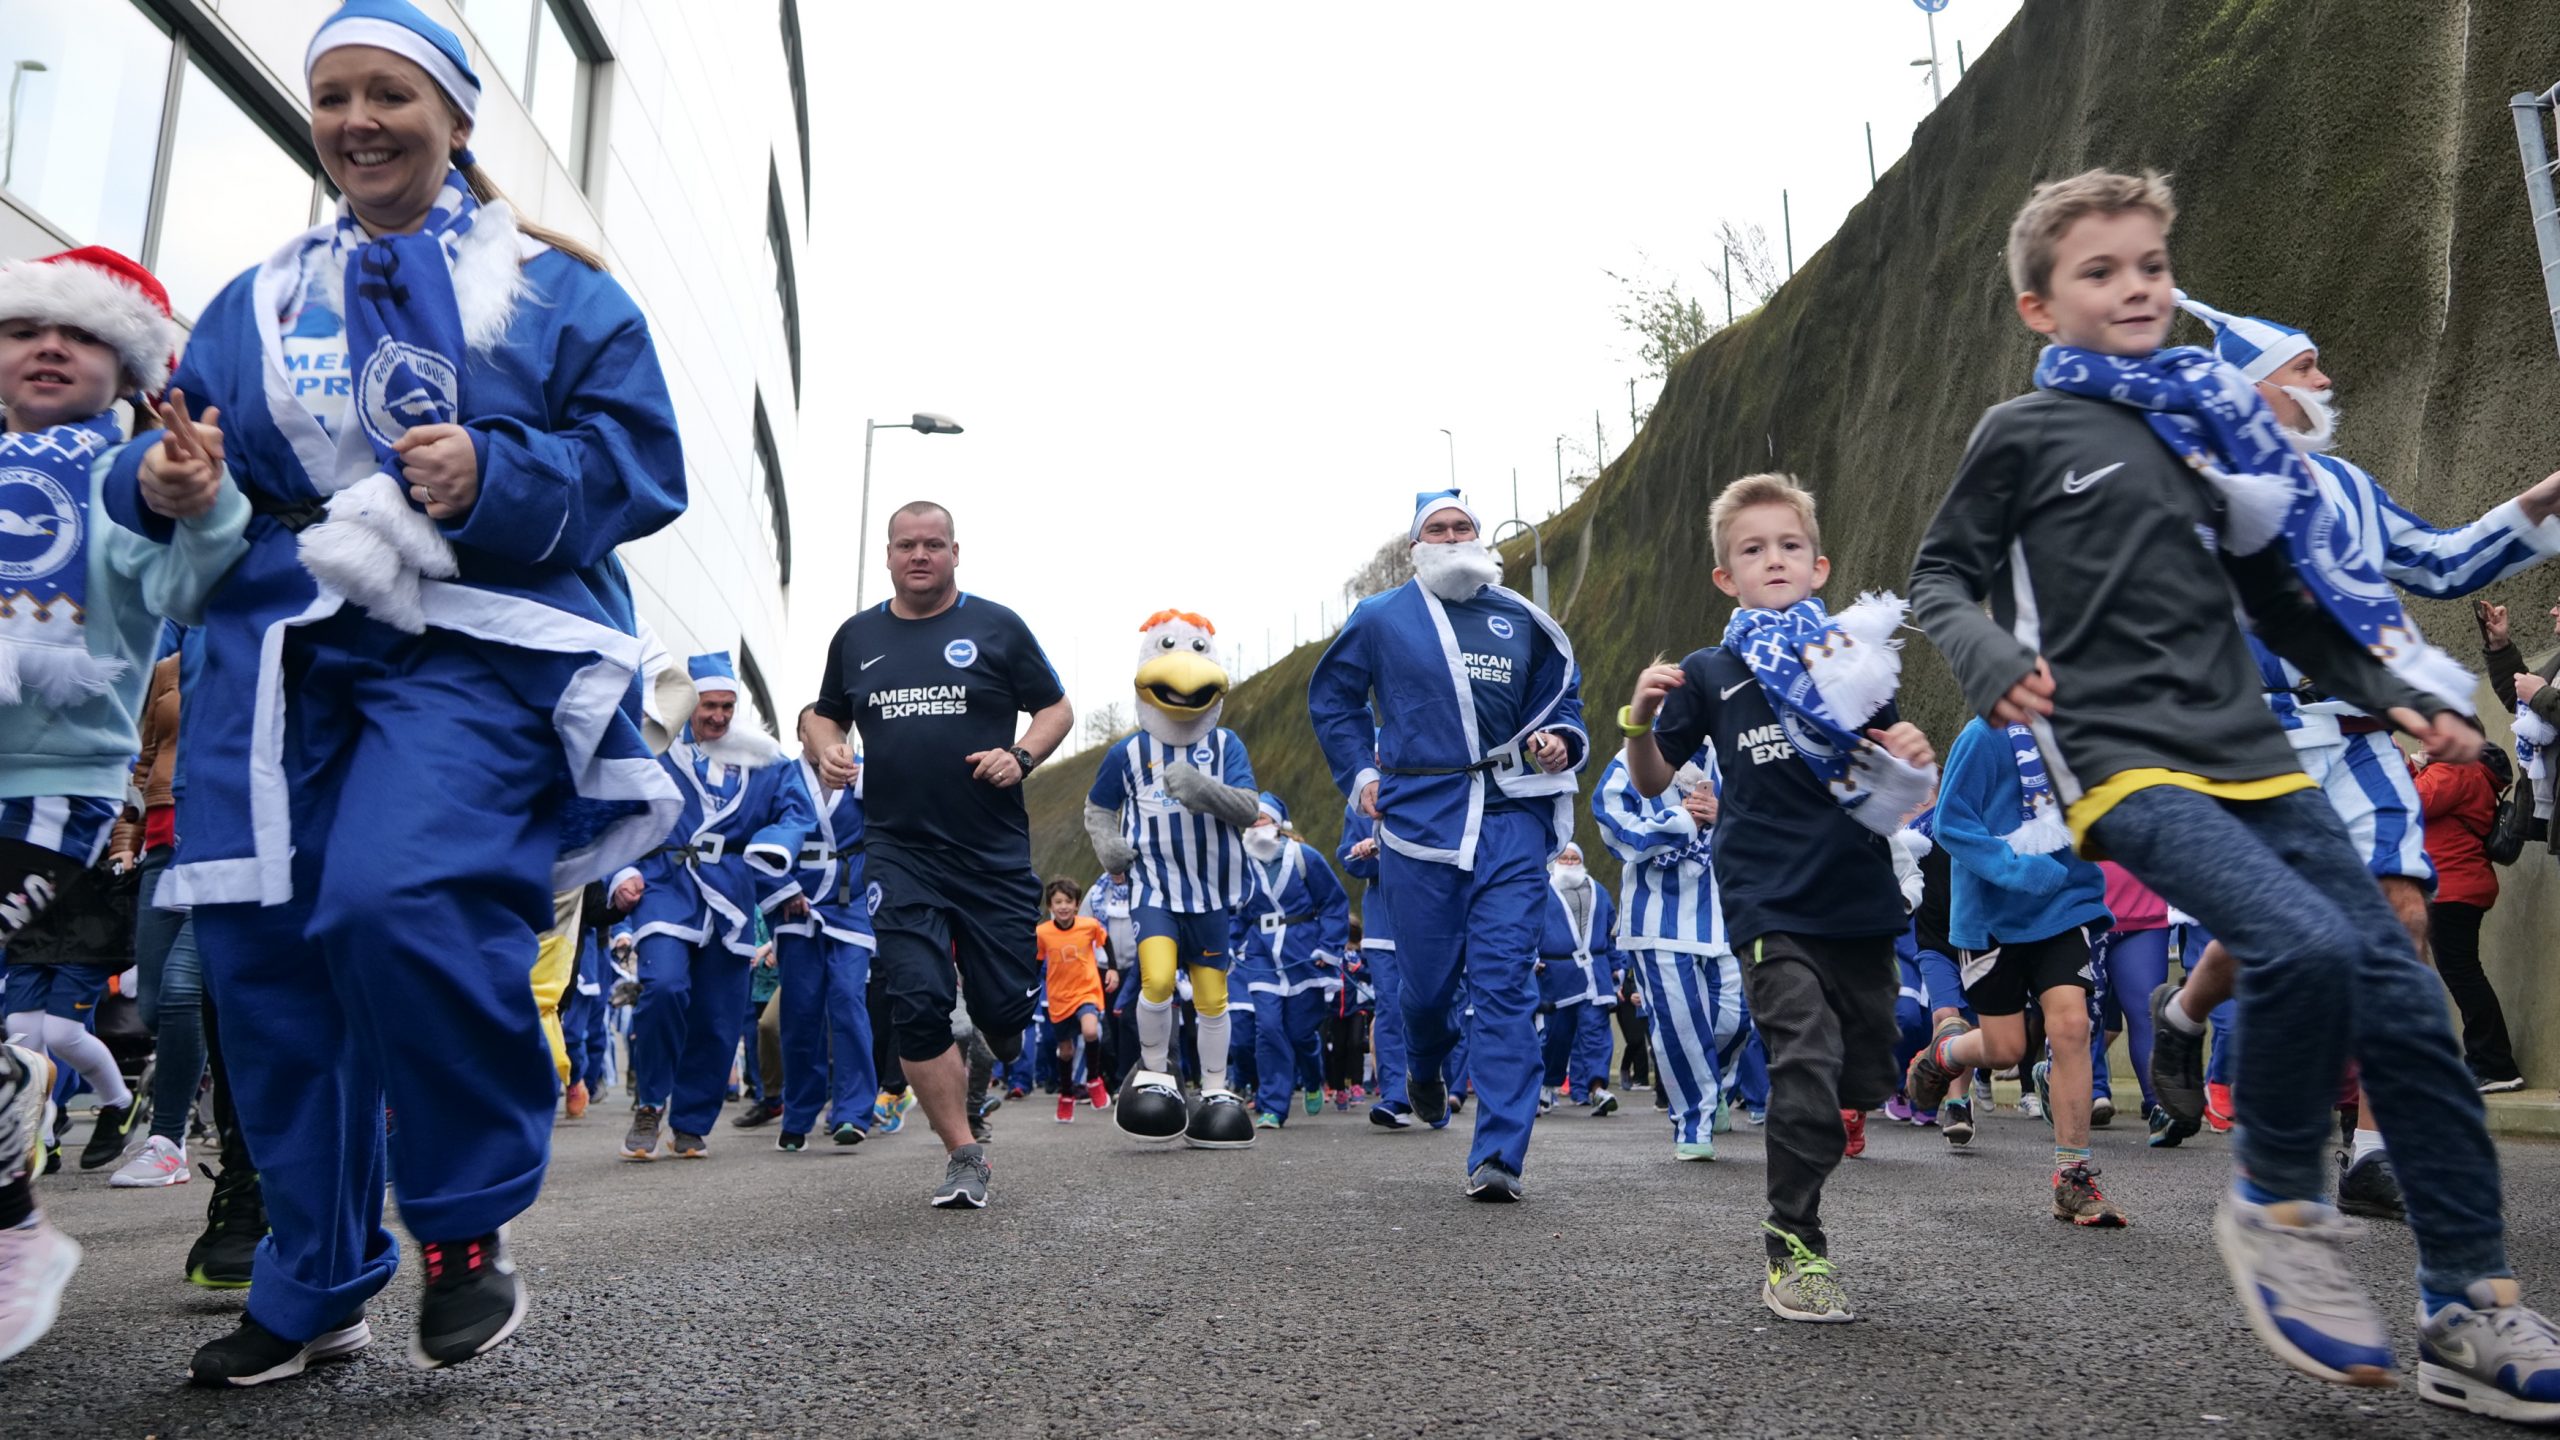 Festive Fun Run raises money for Albion in the Community